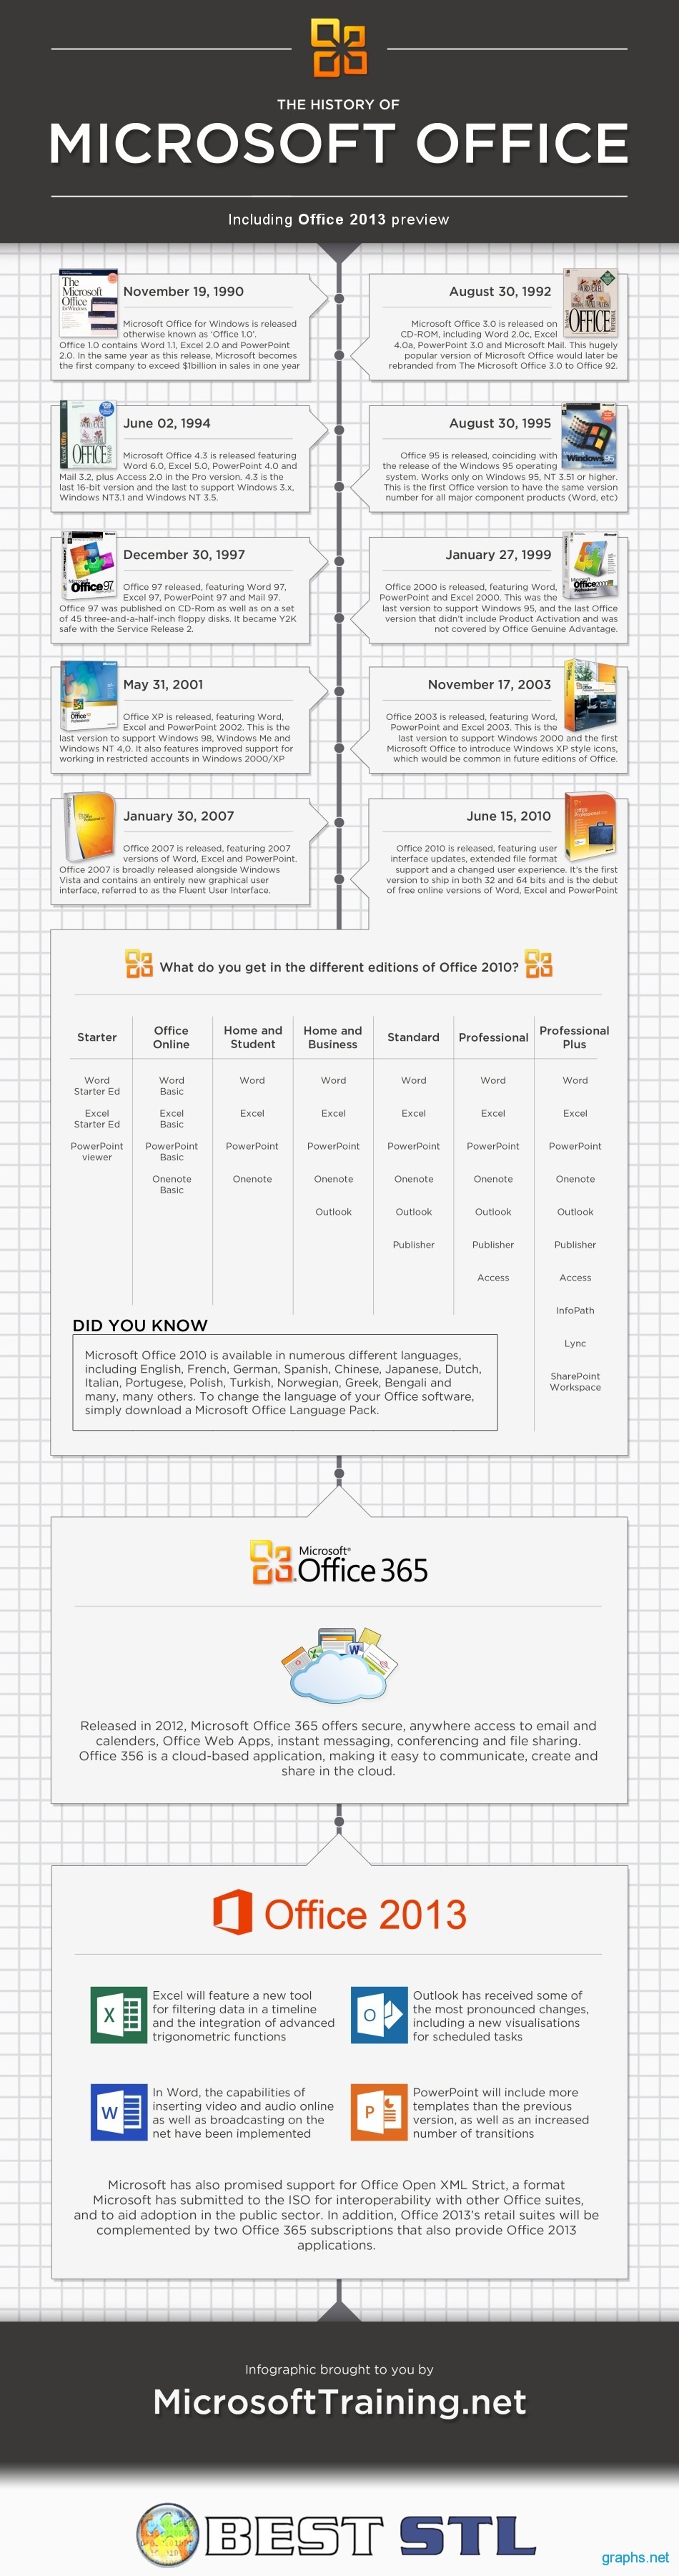 Microsoft Office History